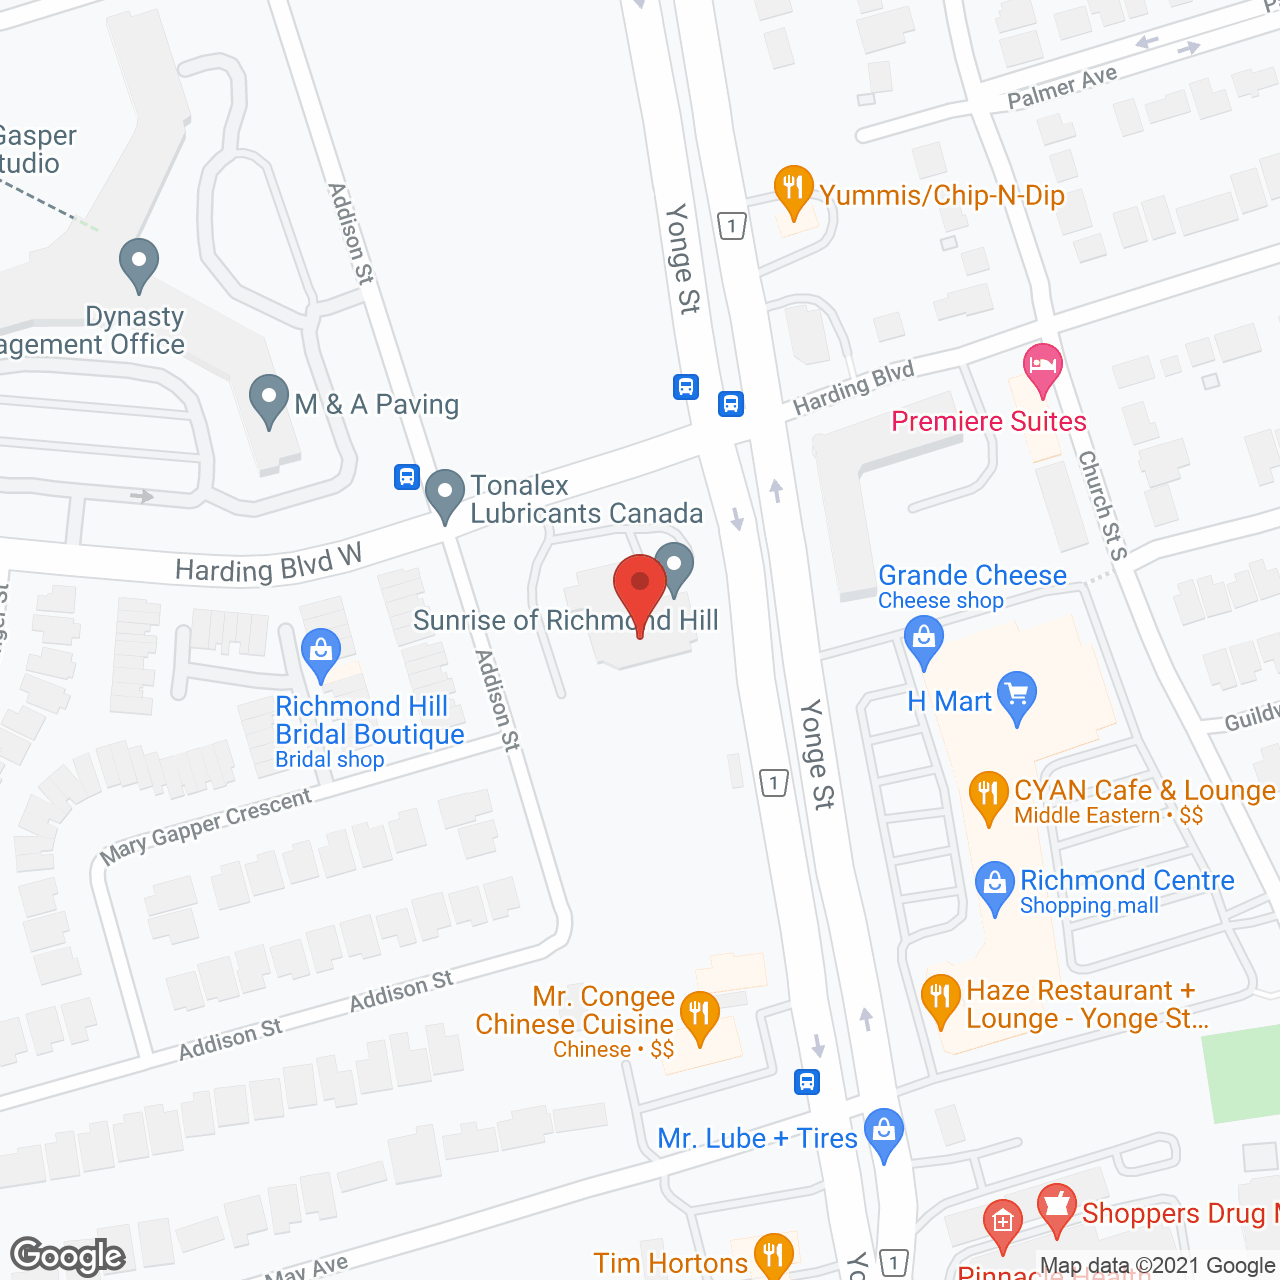 Sunrise of Richmond Hill in google map